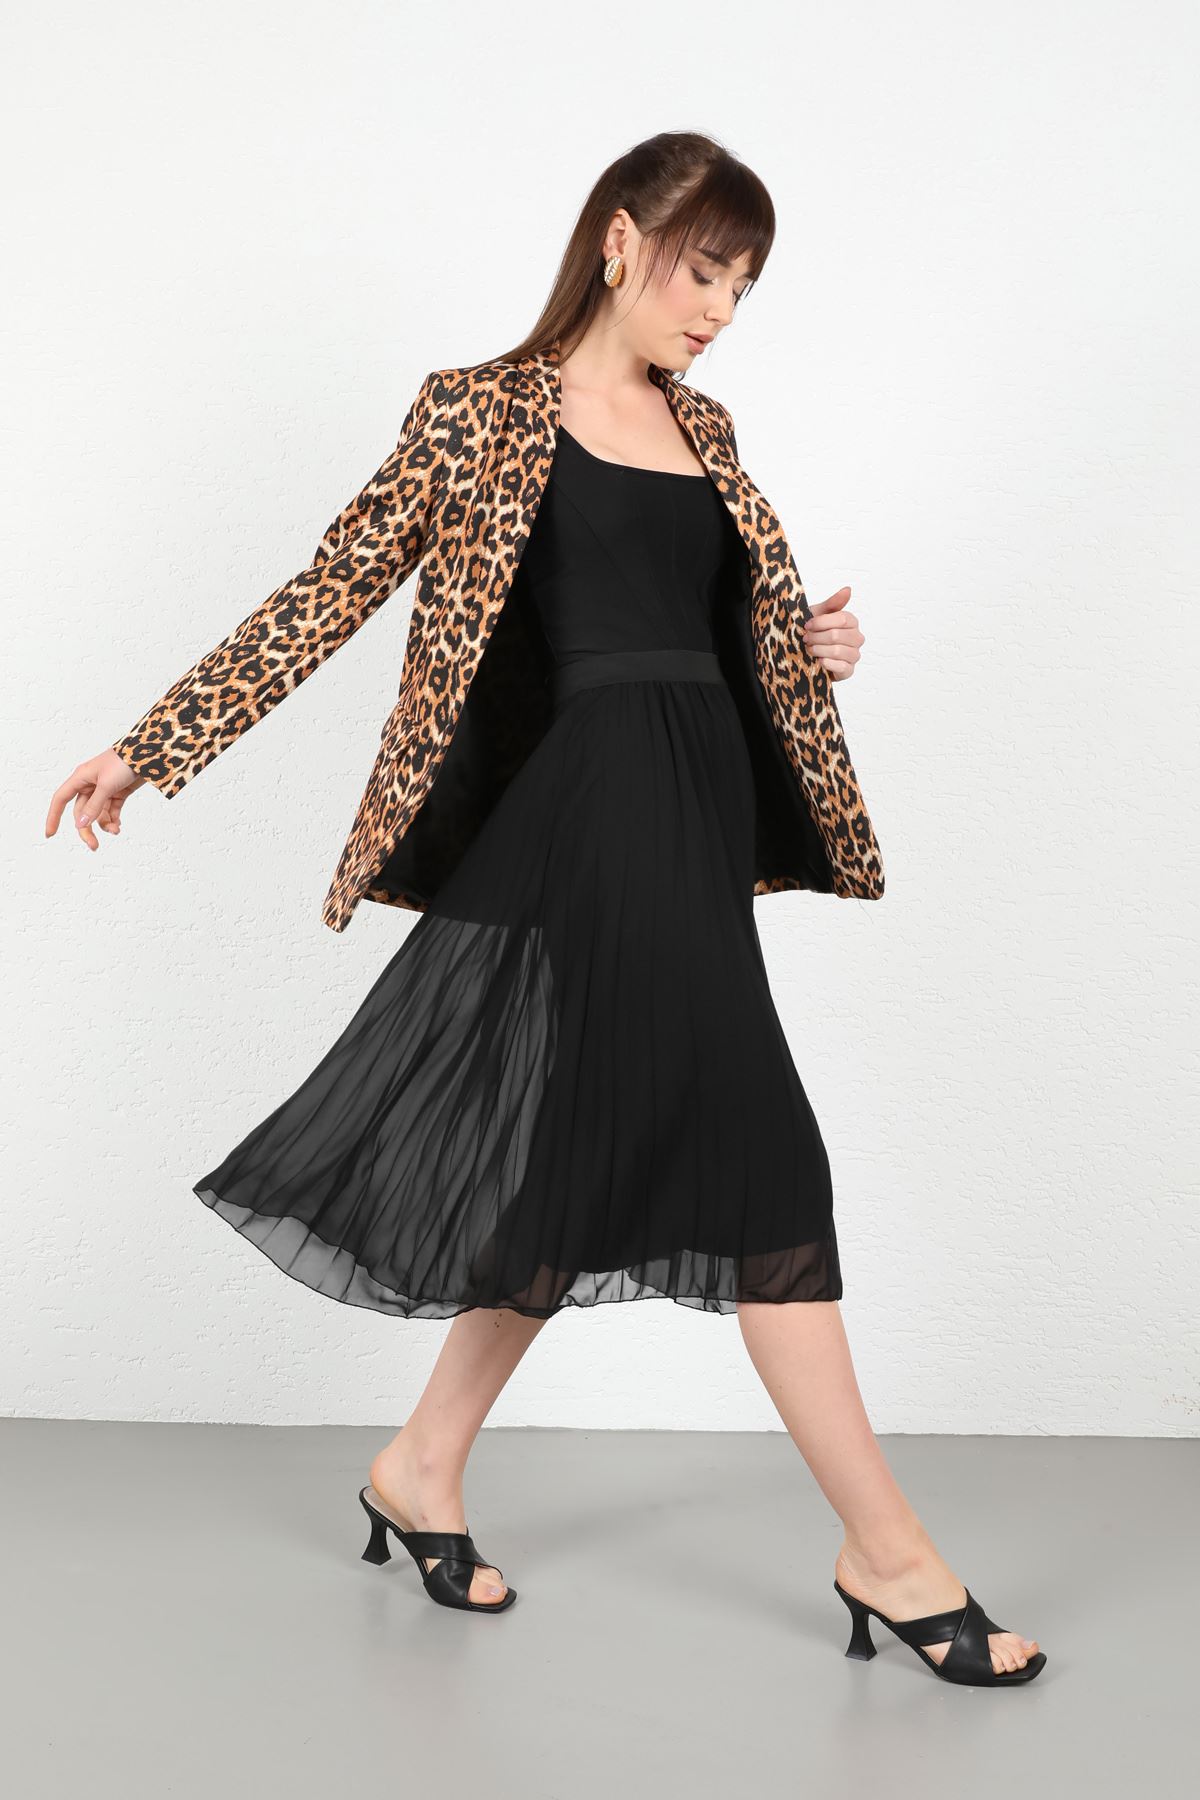 Licra Fabric Wing Collar Below Hip Classical Leopard Print Women Jacket - Light Brown